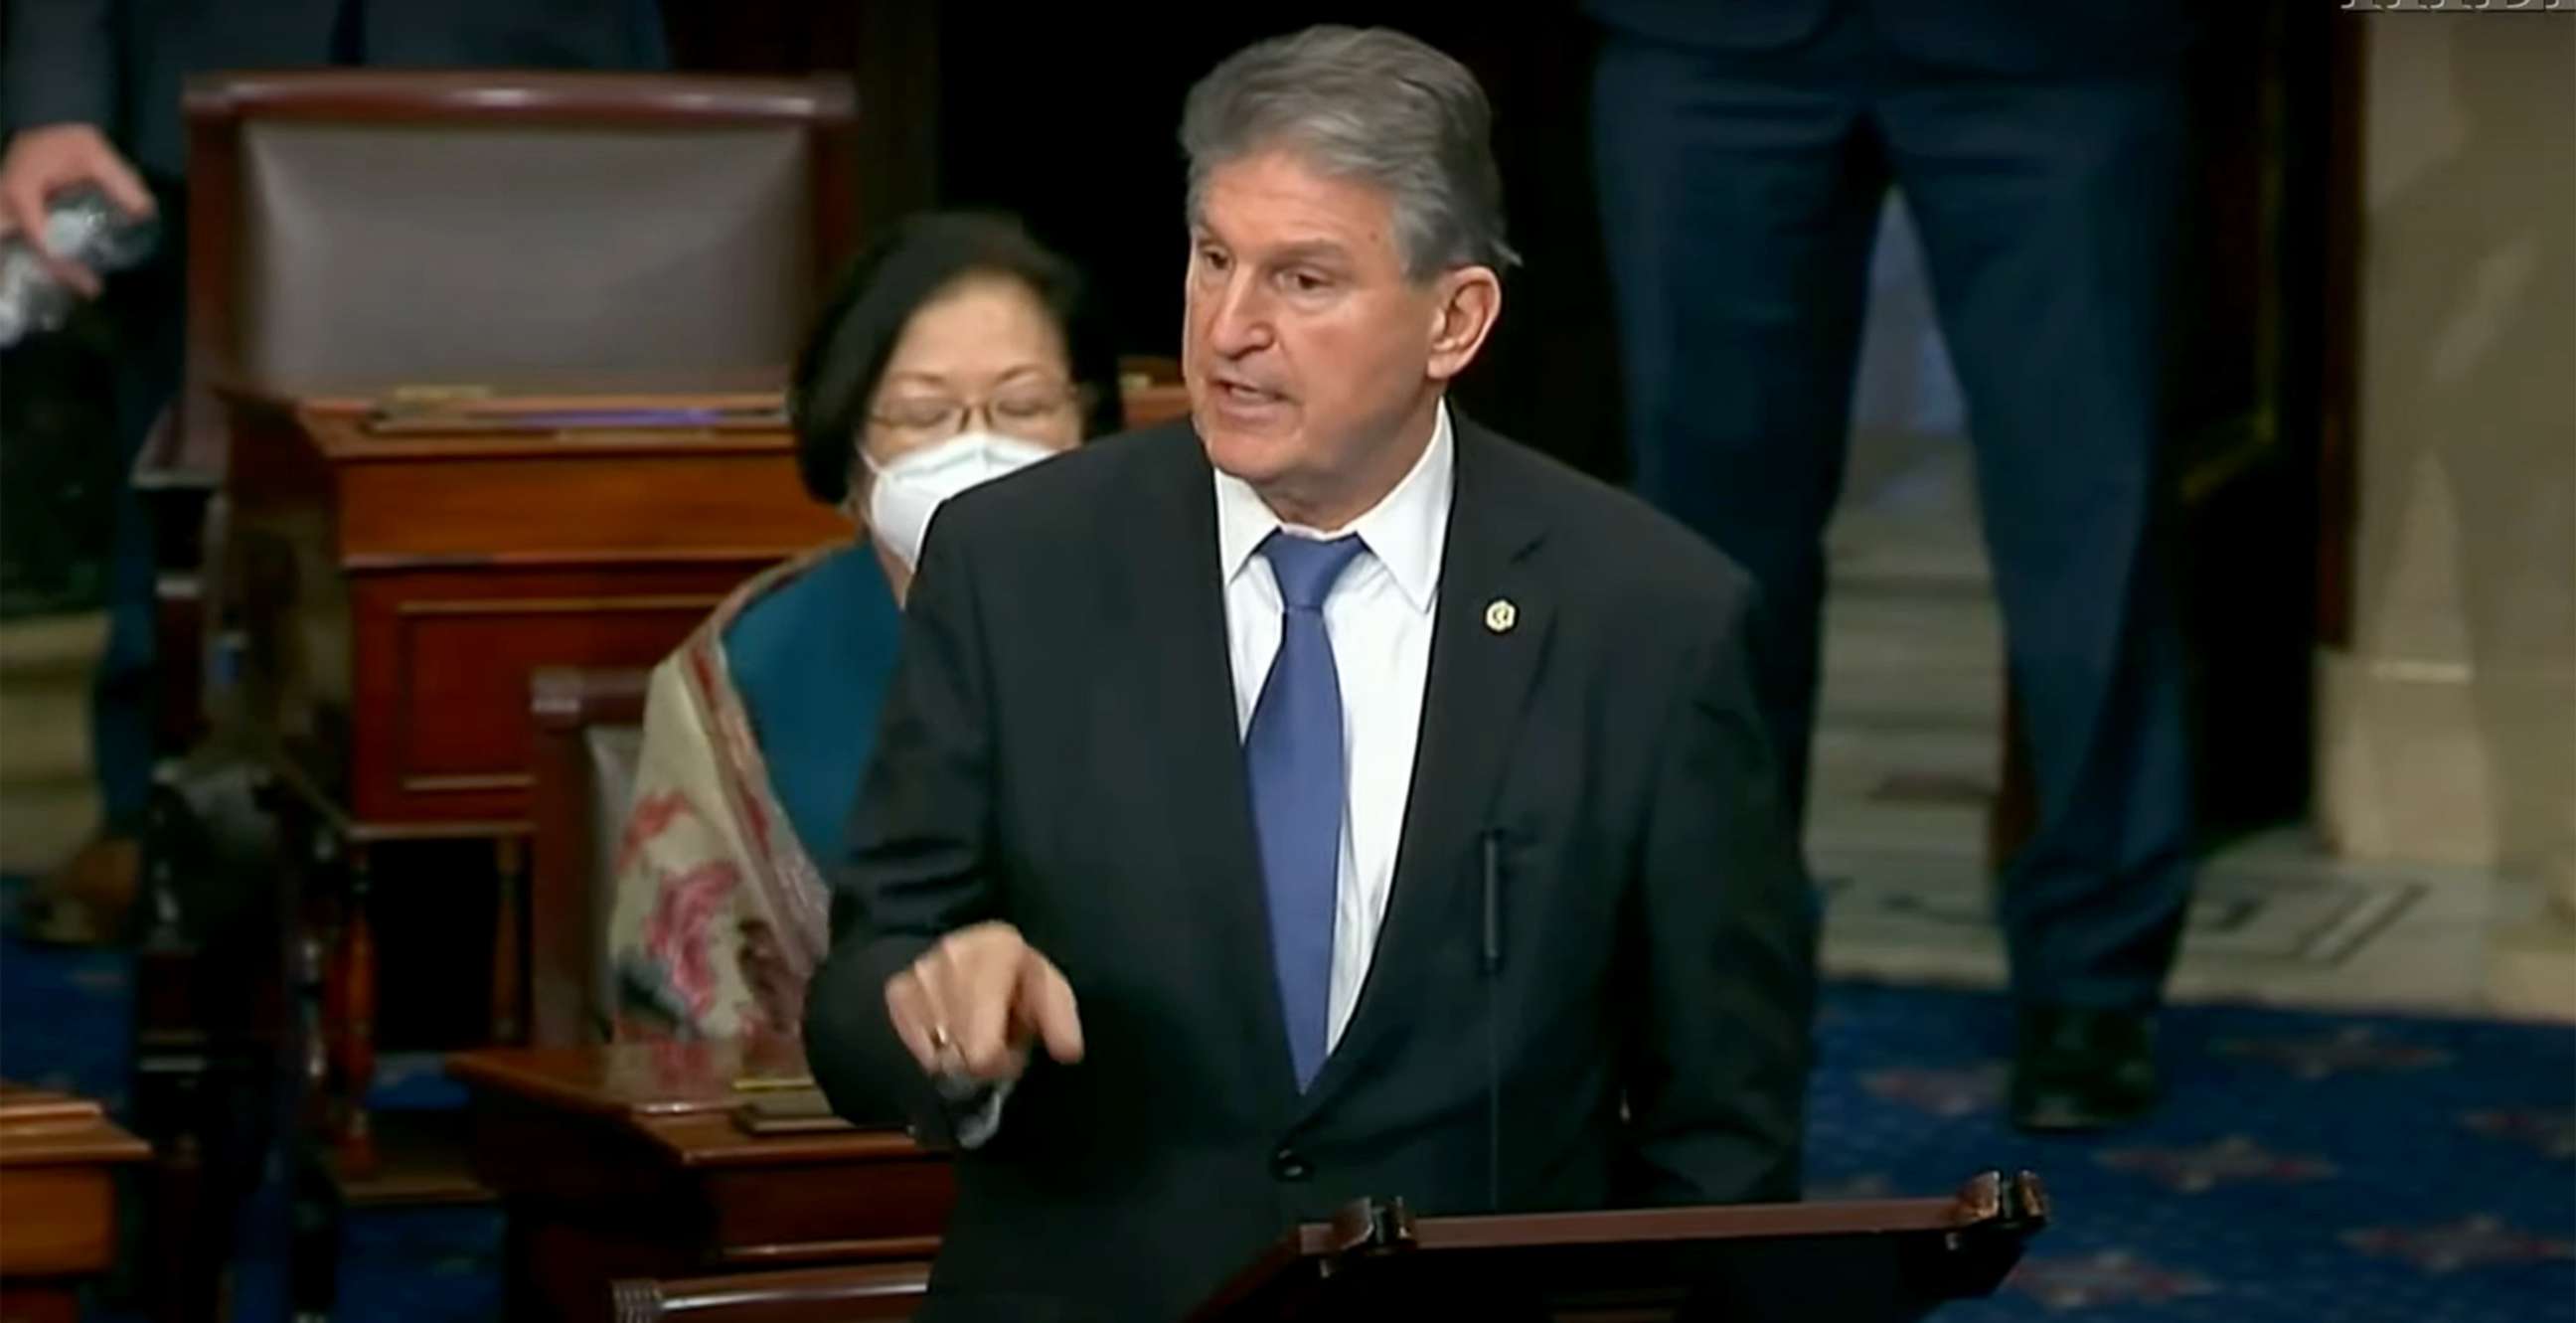 PHOTO: Senator Joe Manchin speaks before the Senate votes on the coronavirus relief bill in Washington, D.C., March 6, 2021.